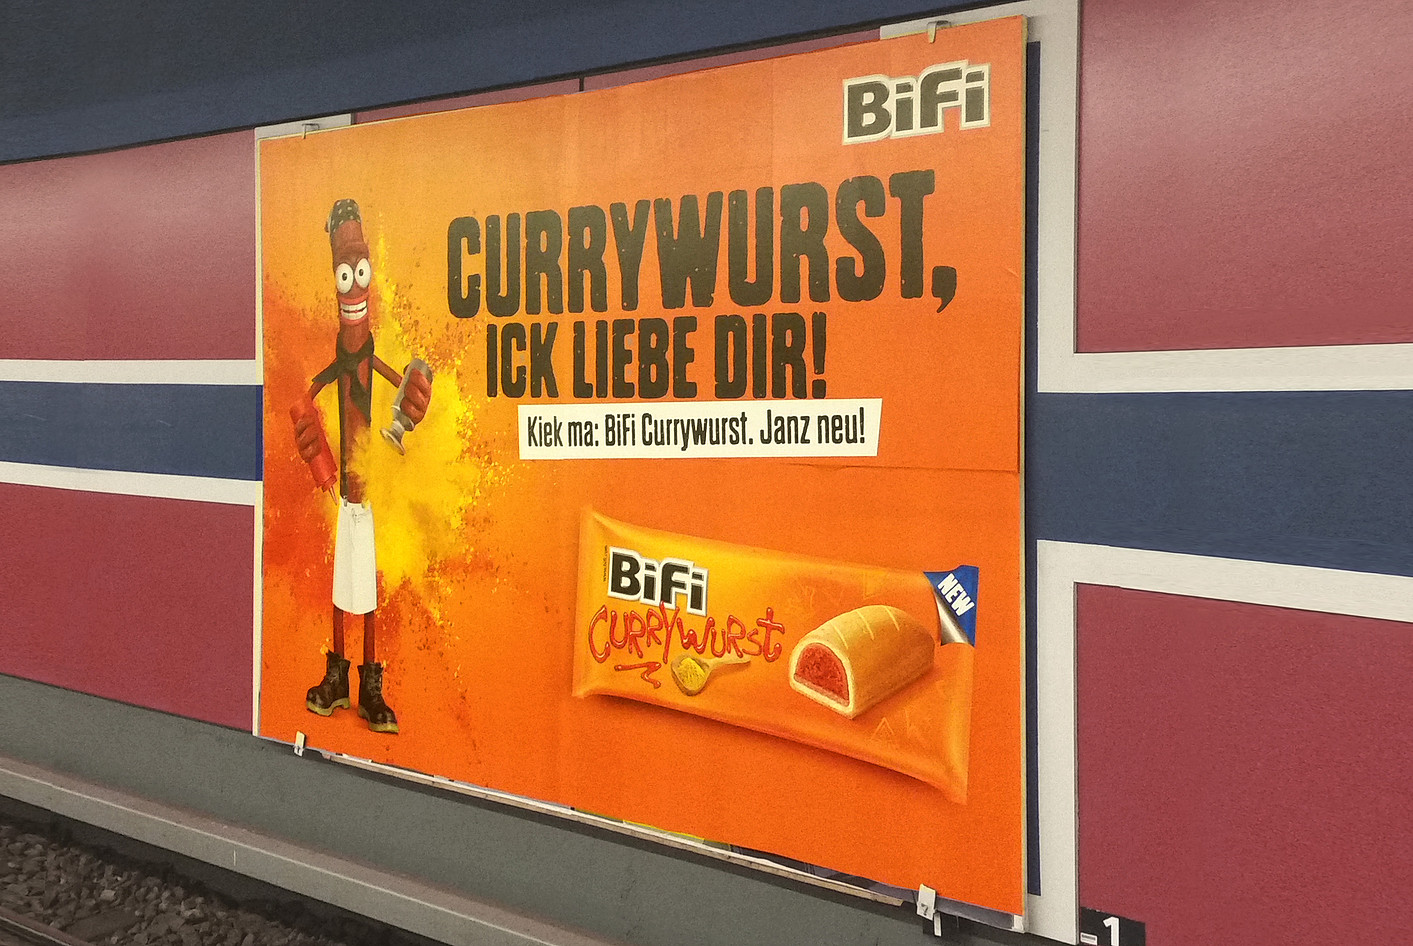 BiFi Currywurst Plakat in Ubahnstation